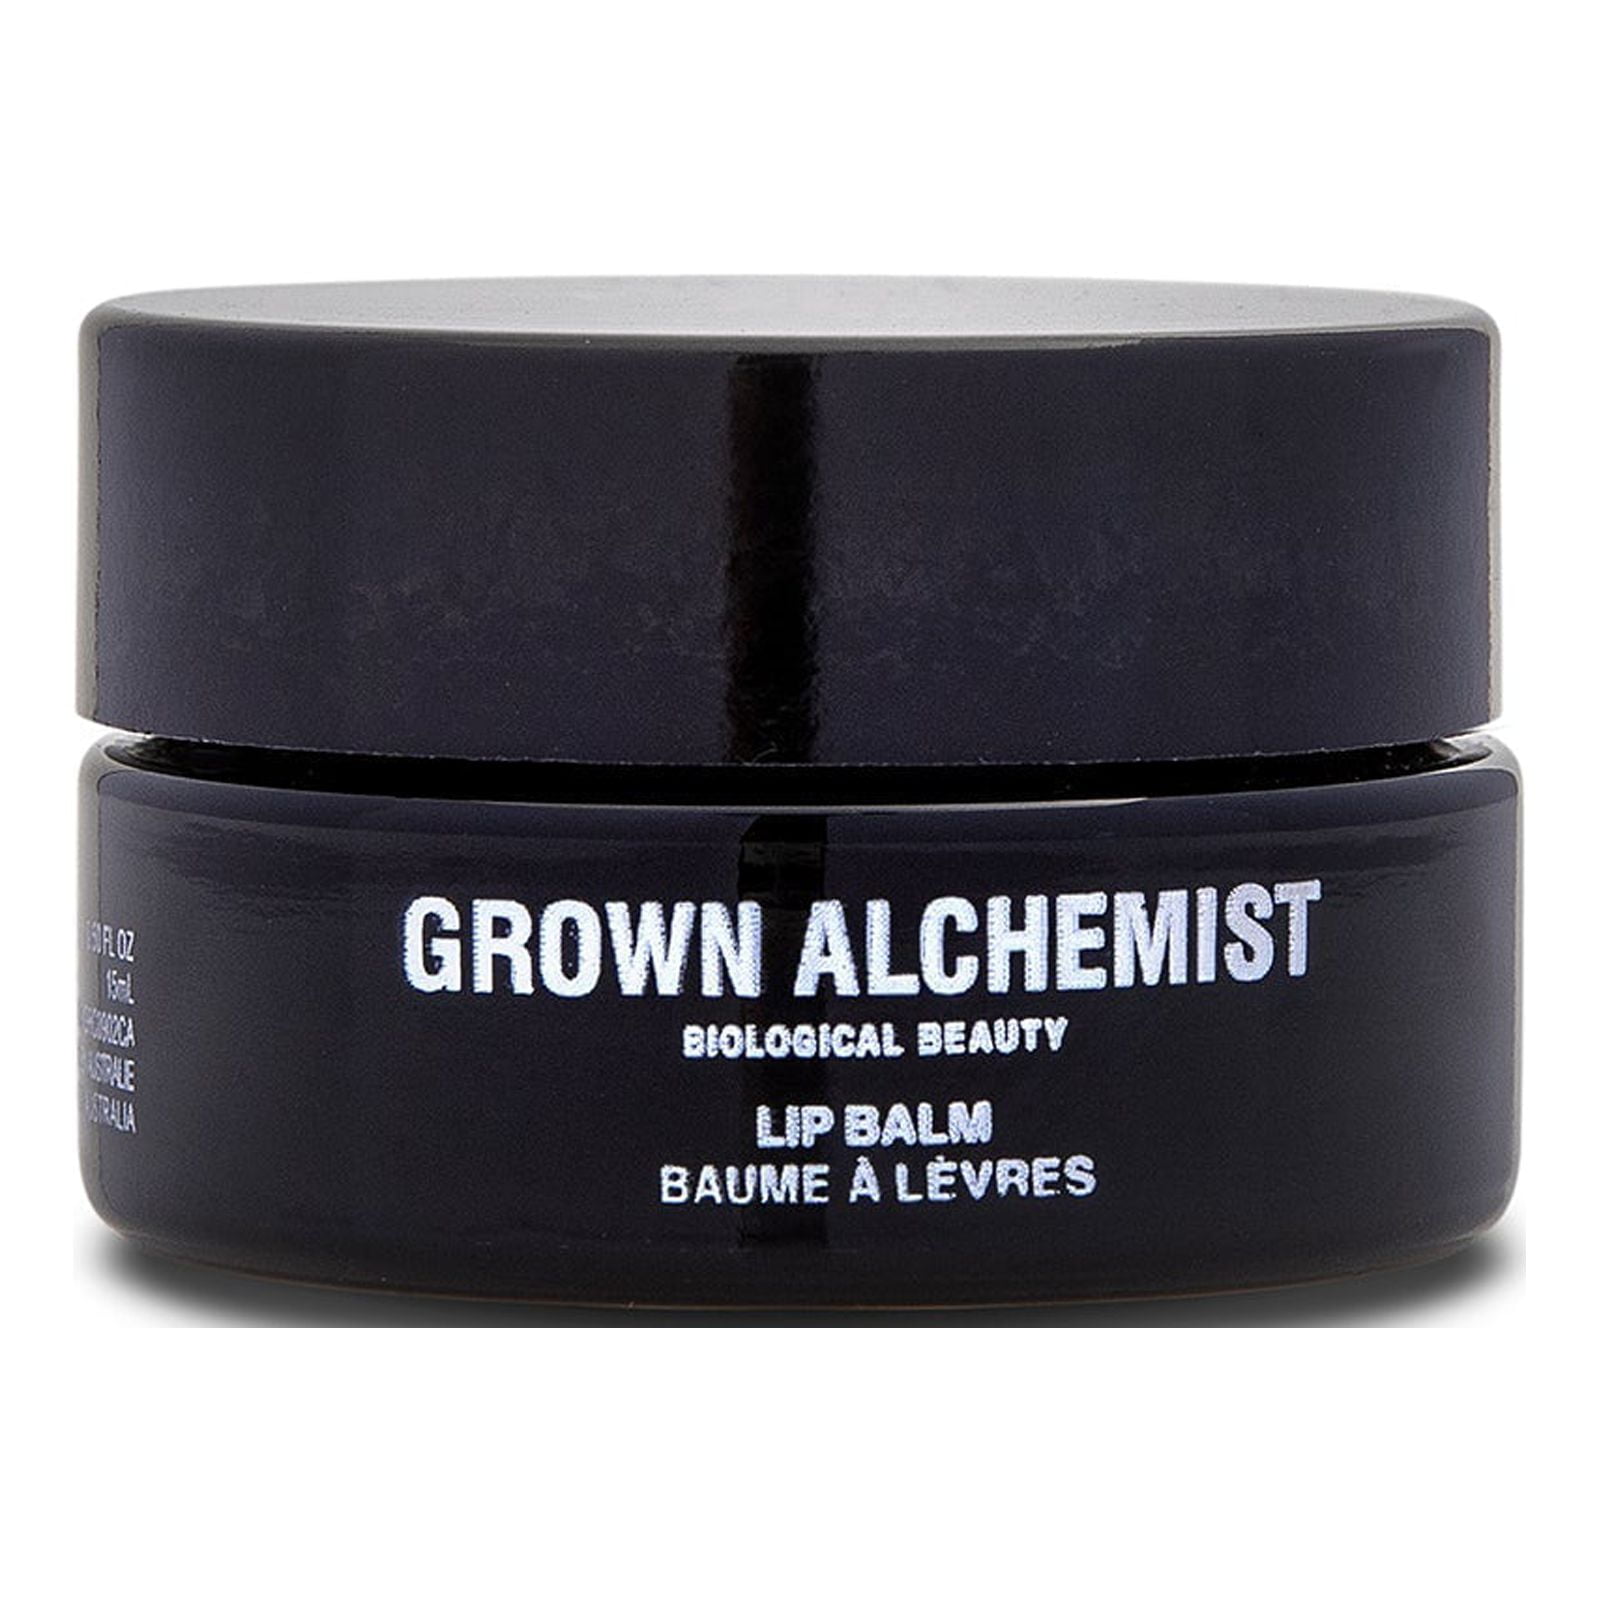 Grown Alchemist 3 - 248126 Antioxidant Balm oz Lip 0.5 Plus Complex